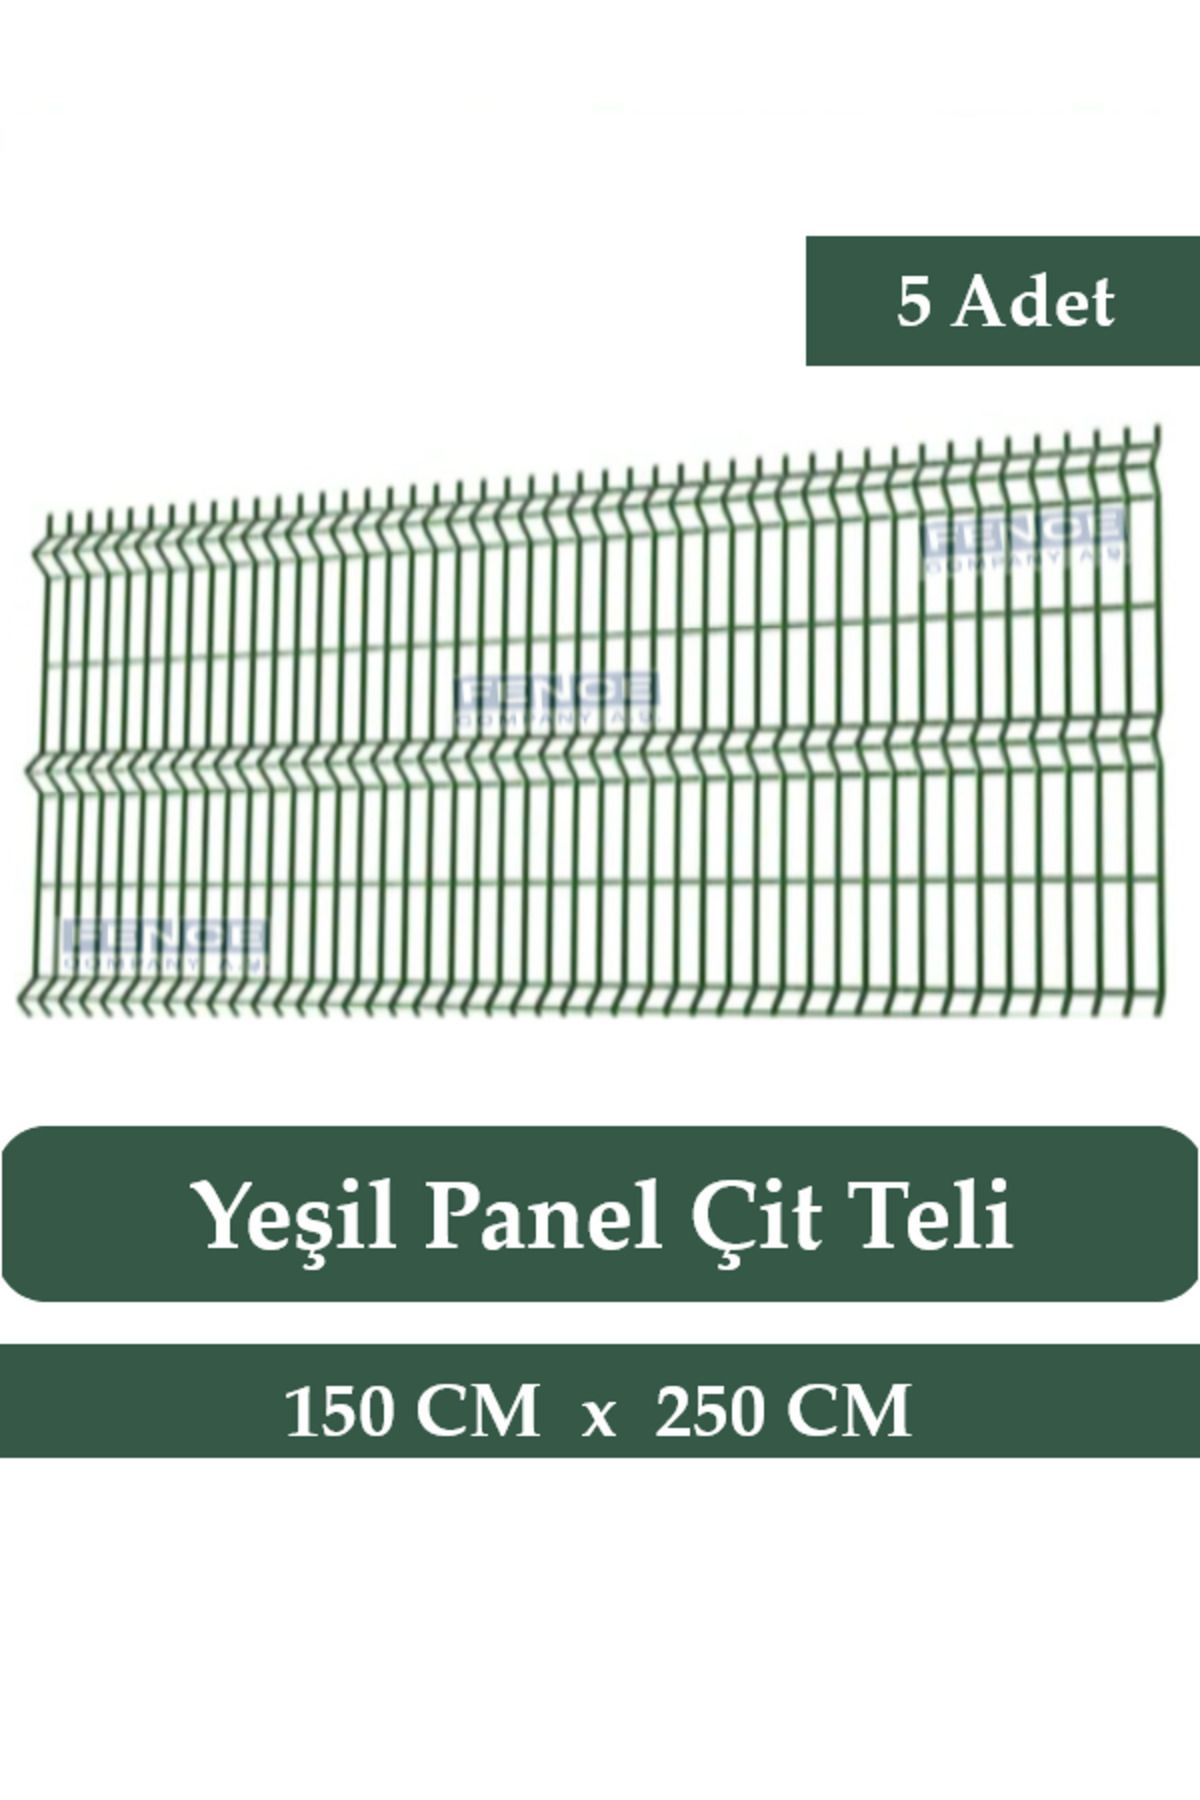 Fence Company 150 X 250 Cm Panel Çit Teli | Yeşil Bahçe Çiti | 5 Adet